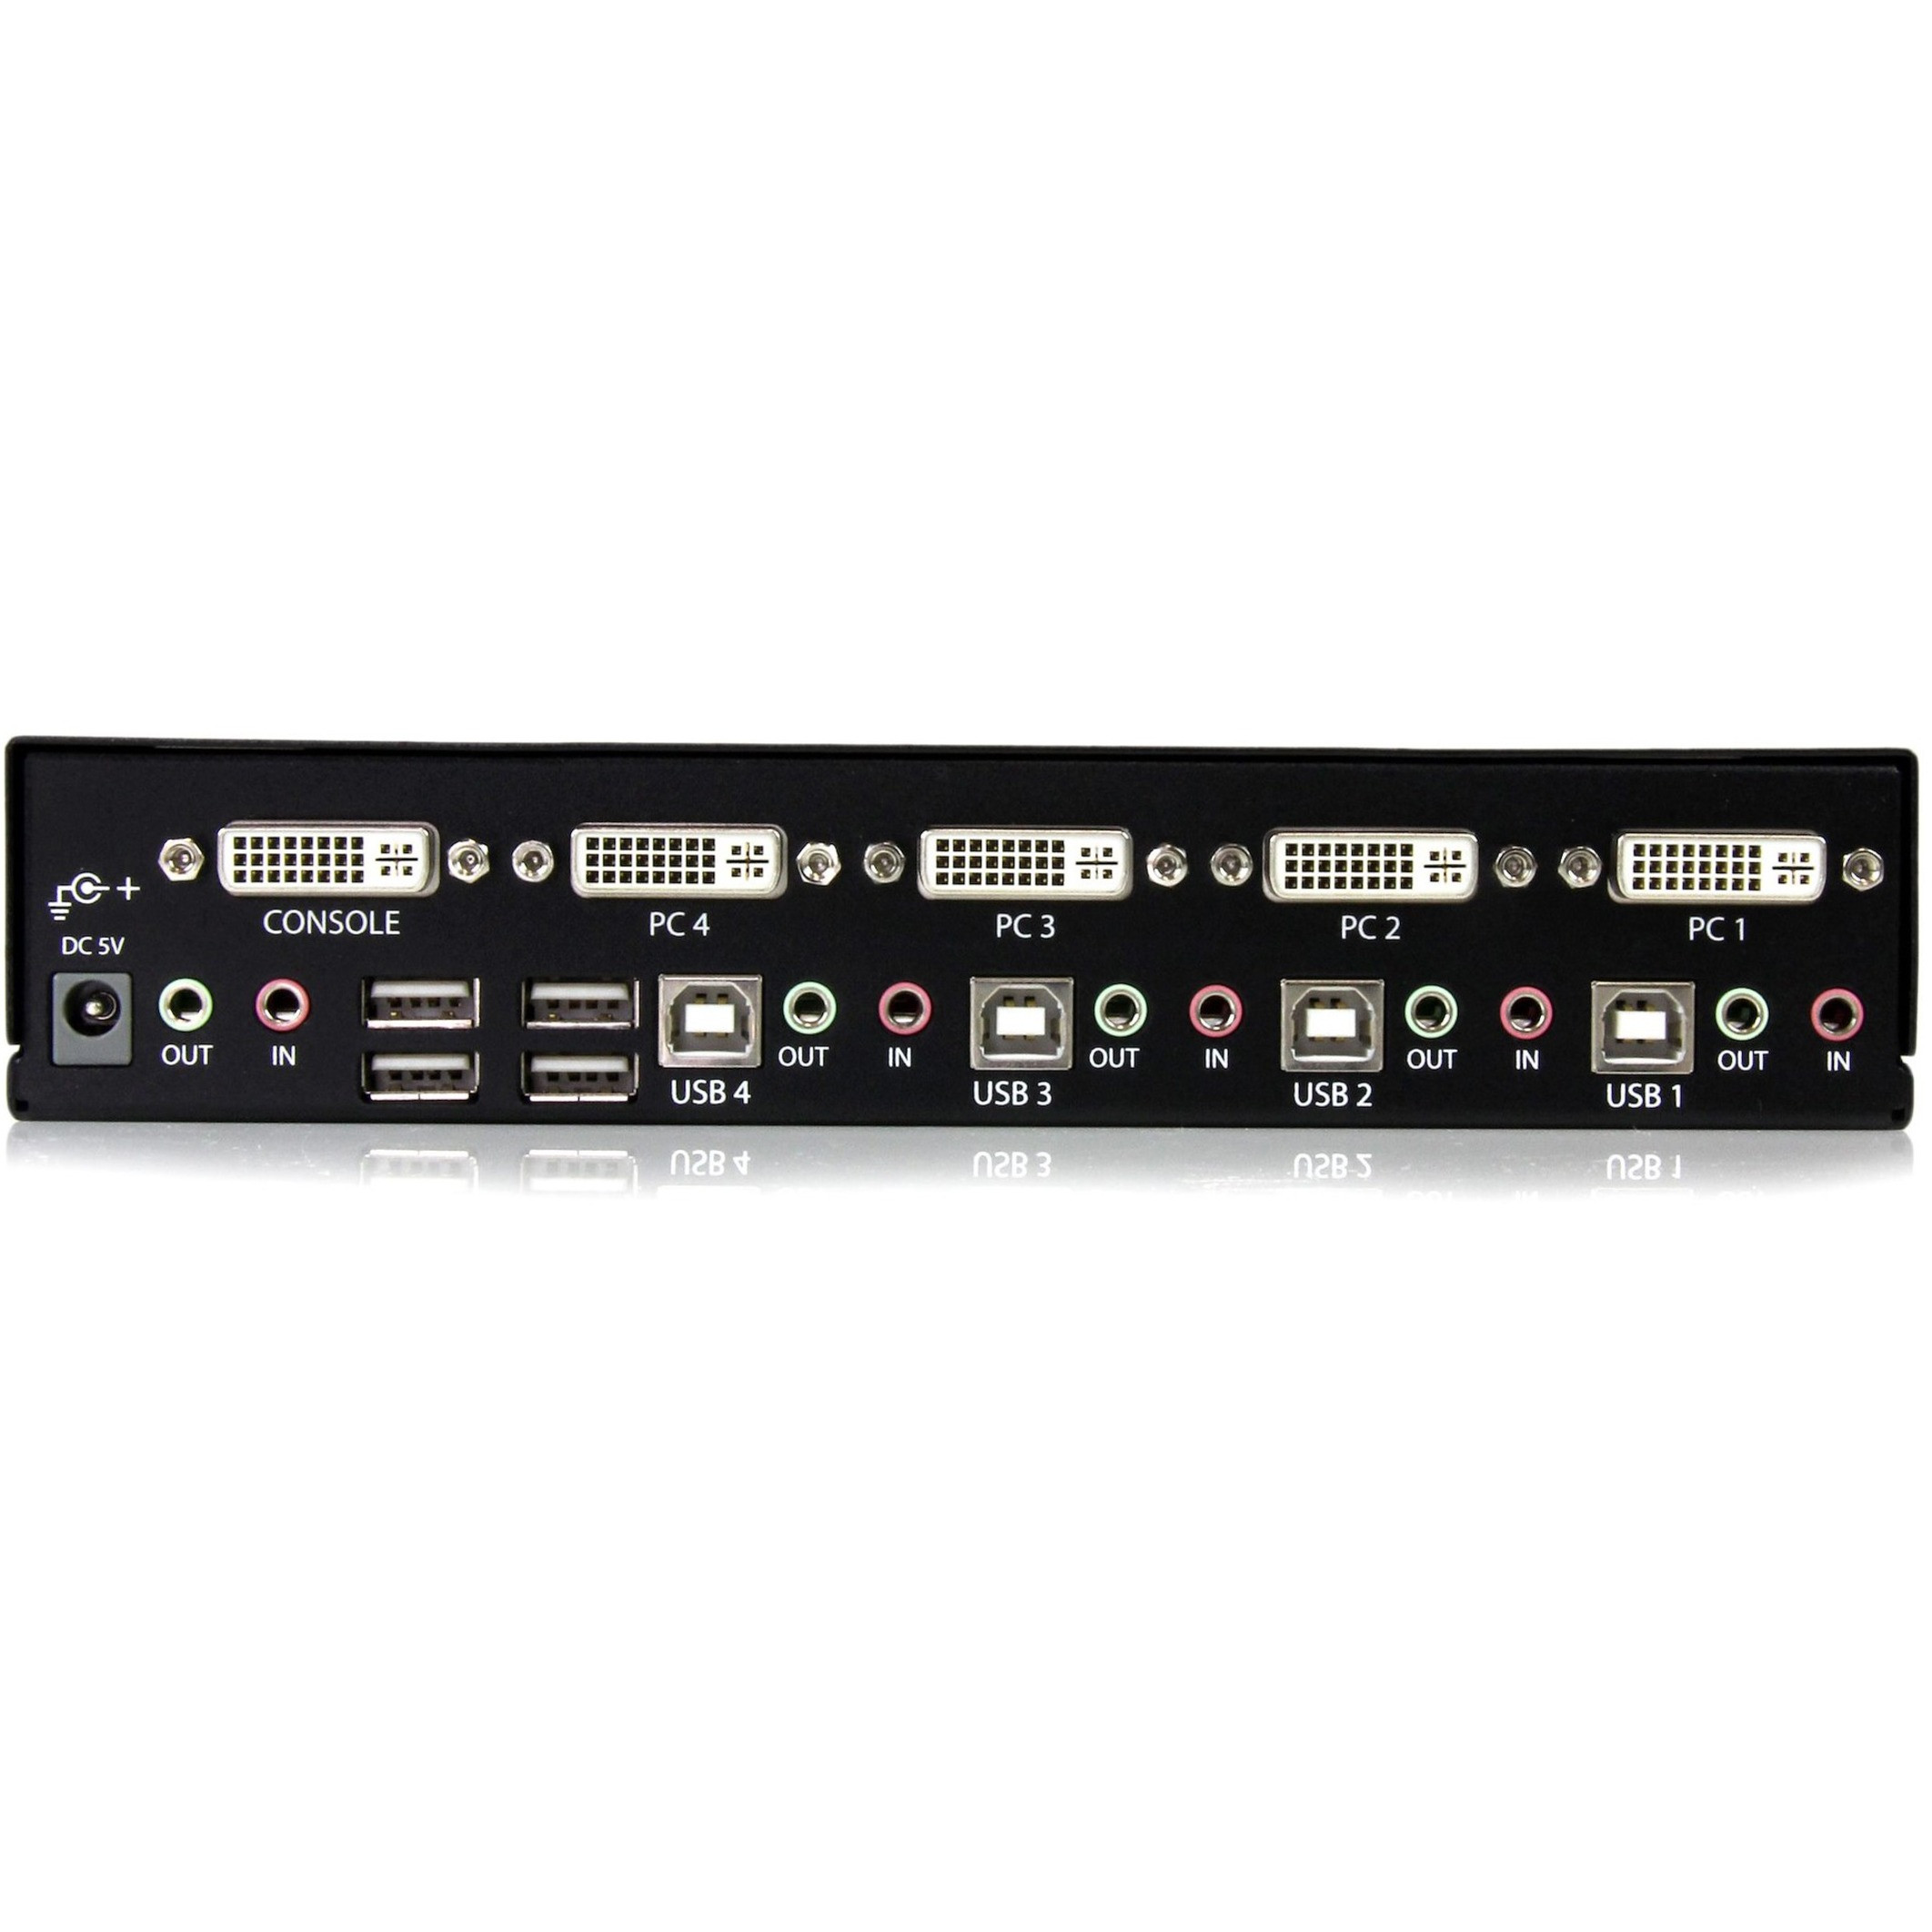 Startech .com .com 4 Port DVI + USB KVM Switch with AudioKVM switchUSB 2.0 Hub2 ports1 local user1UShare keyboard, m… SV431DVIUA